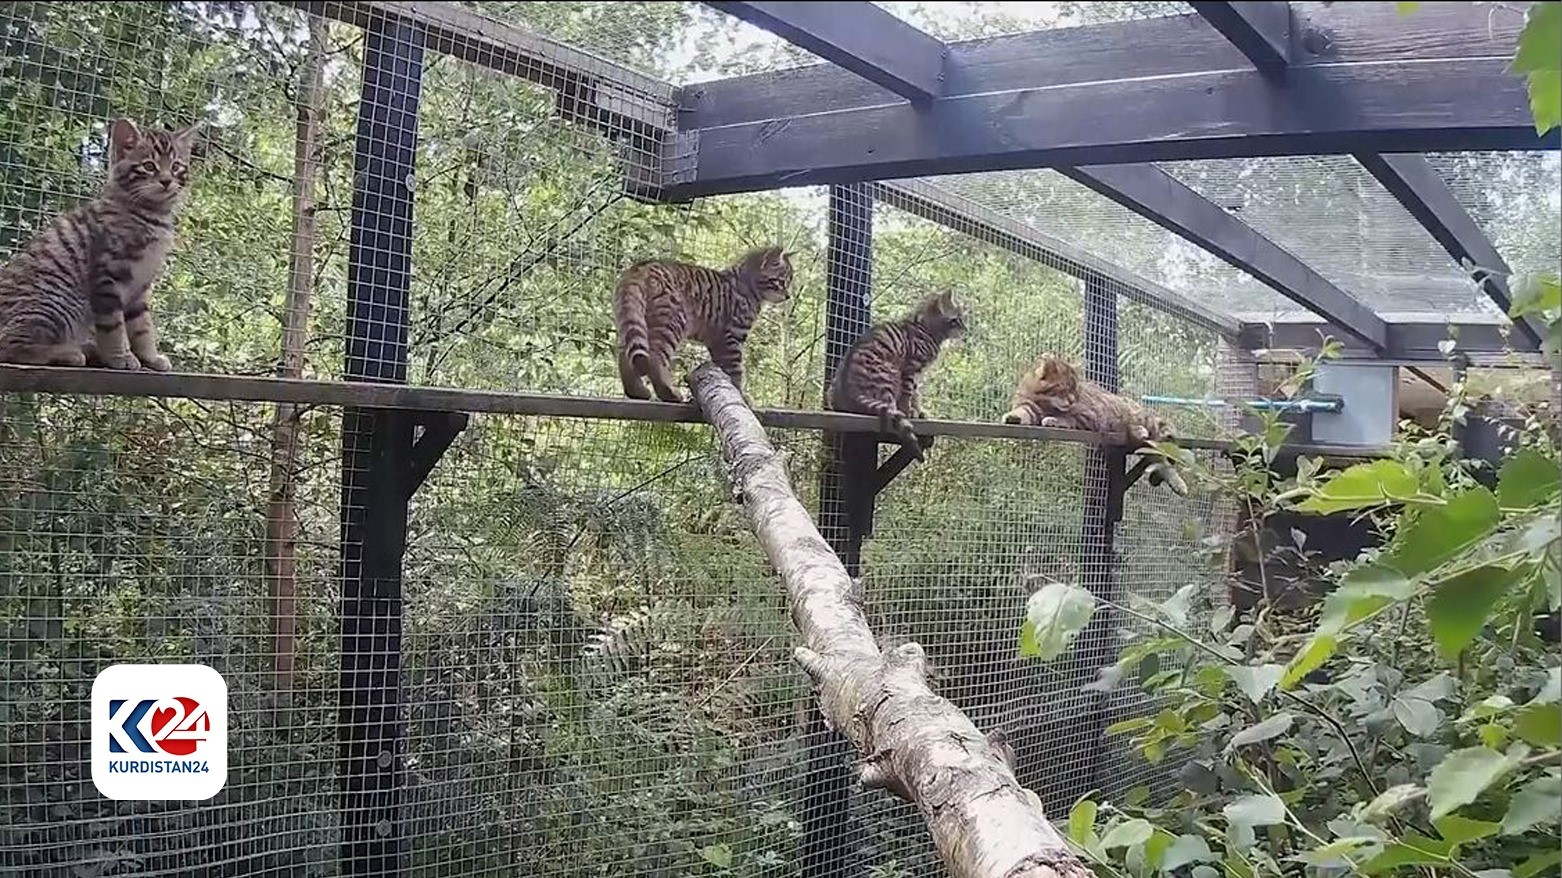 UK wildlife park welcomes litter of critically endangered wildcat kittens